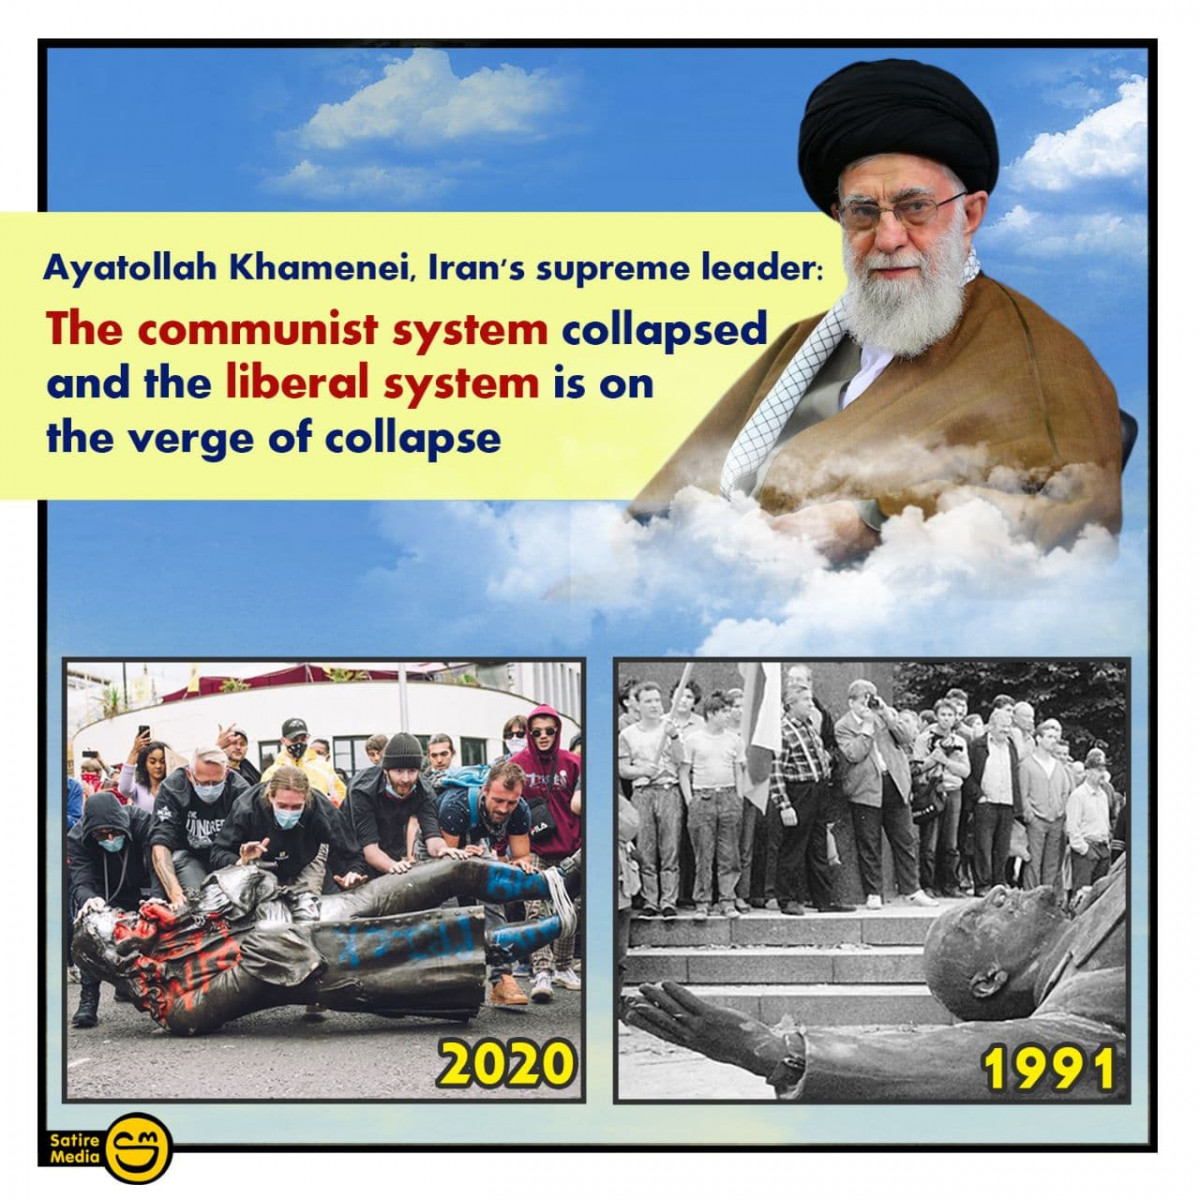 Ayatollah Khamenei, Iran's supreme leader